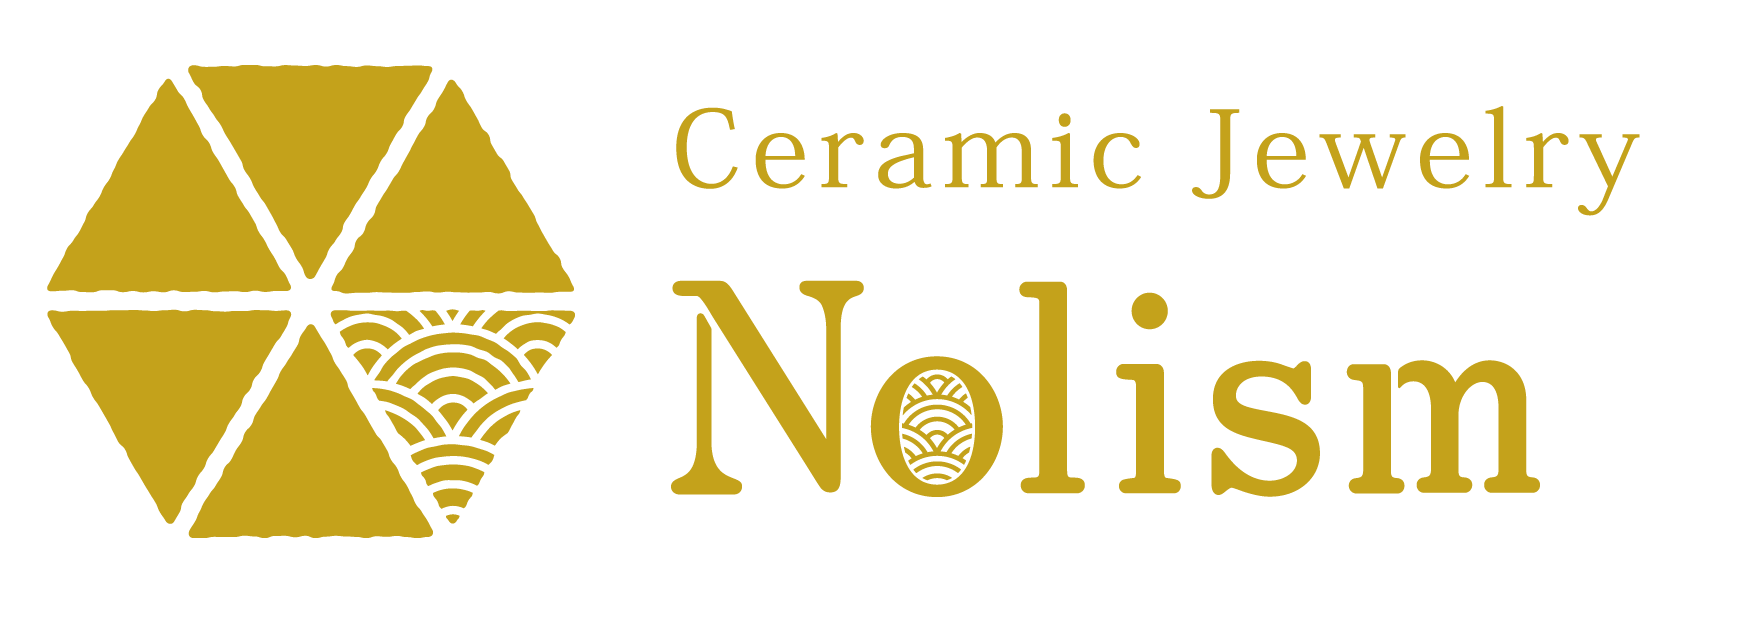 ceramic Jewelry Nolism